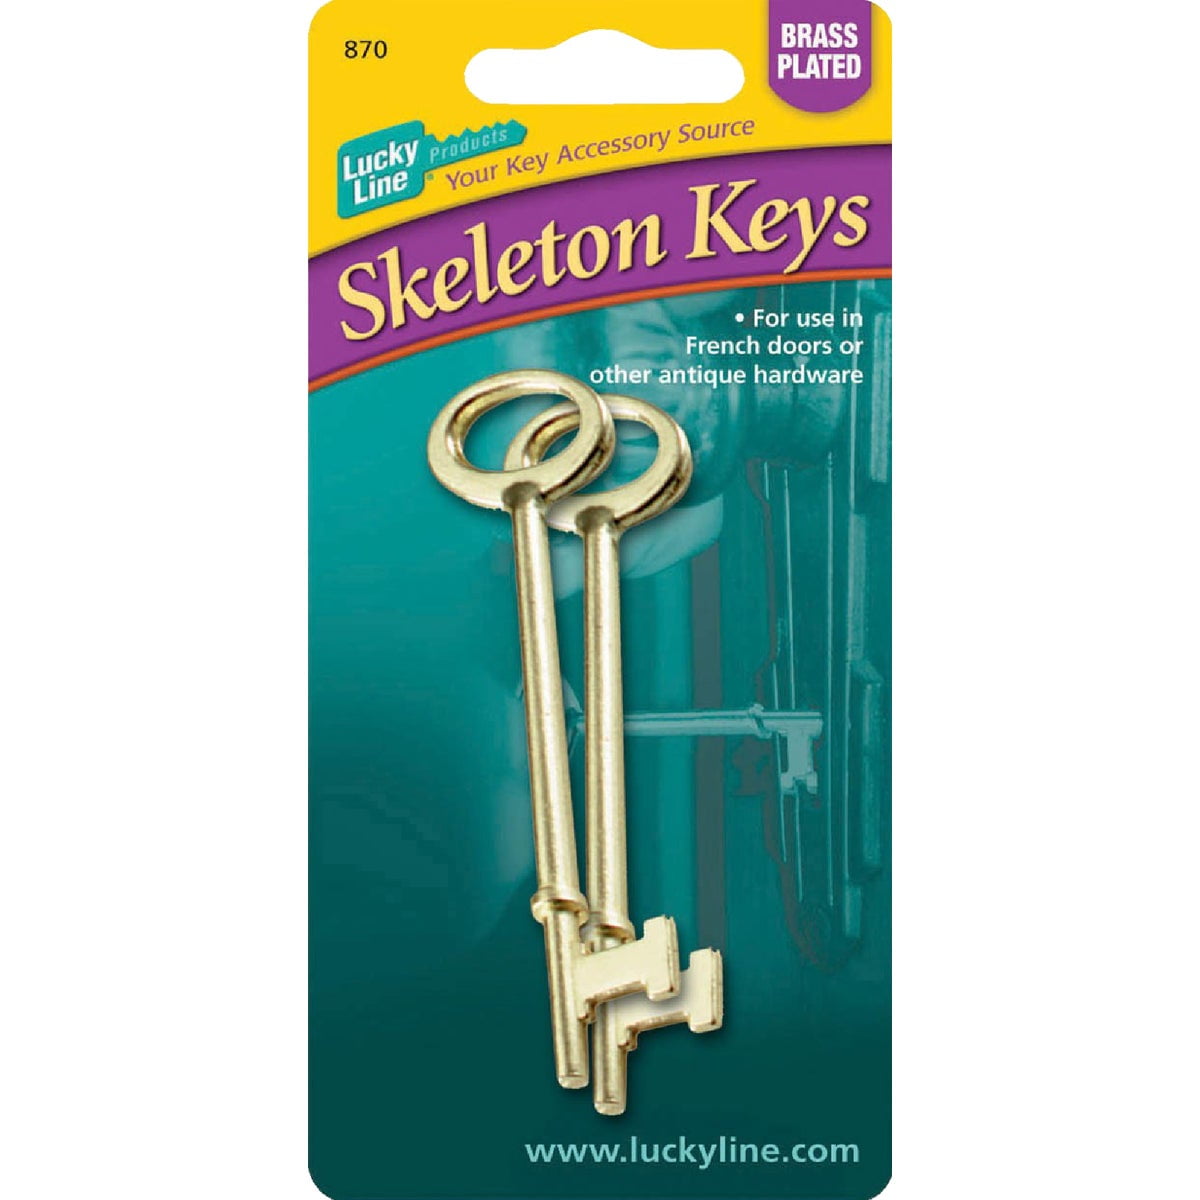 20 Real Antique Keys Collection Vintage Original Metal Skeleton Keys Authentic Old Lock Keys Charm Jewelry Supply Rusty Antique Lot C